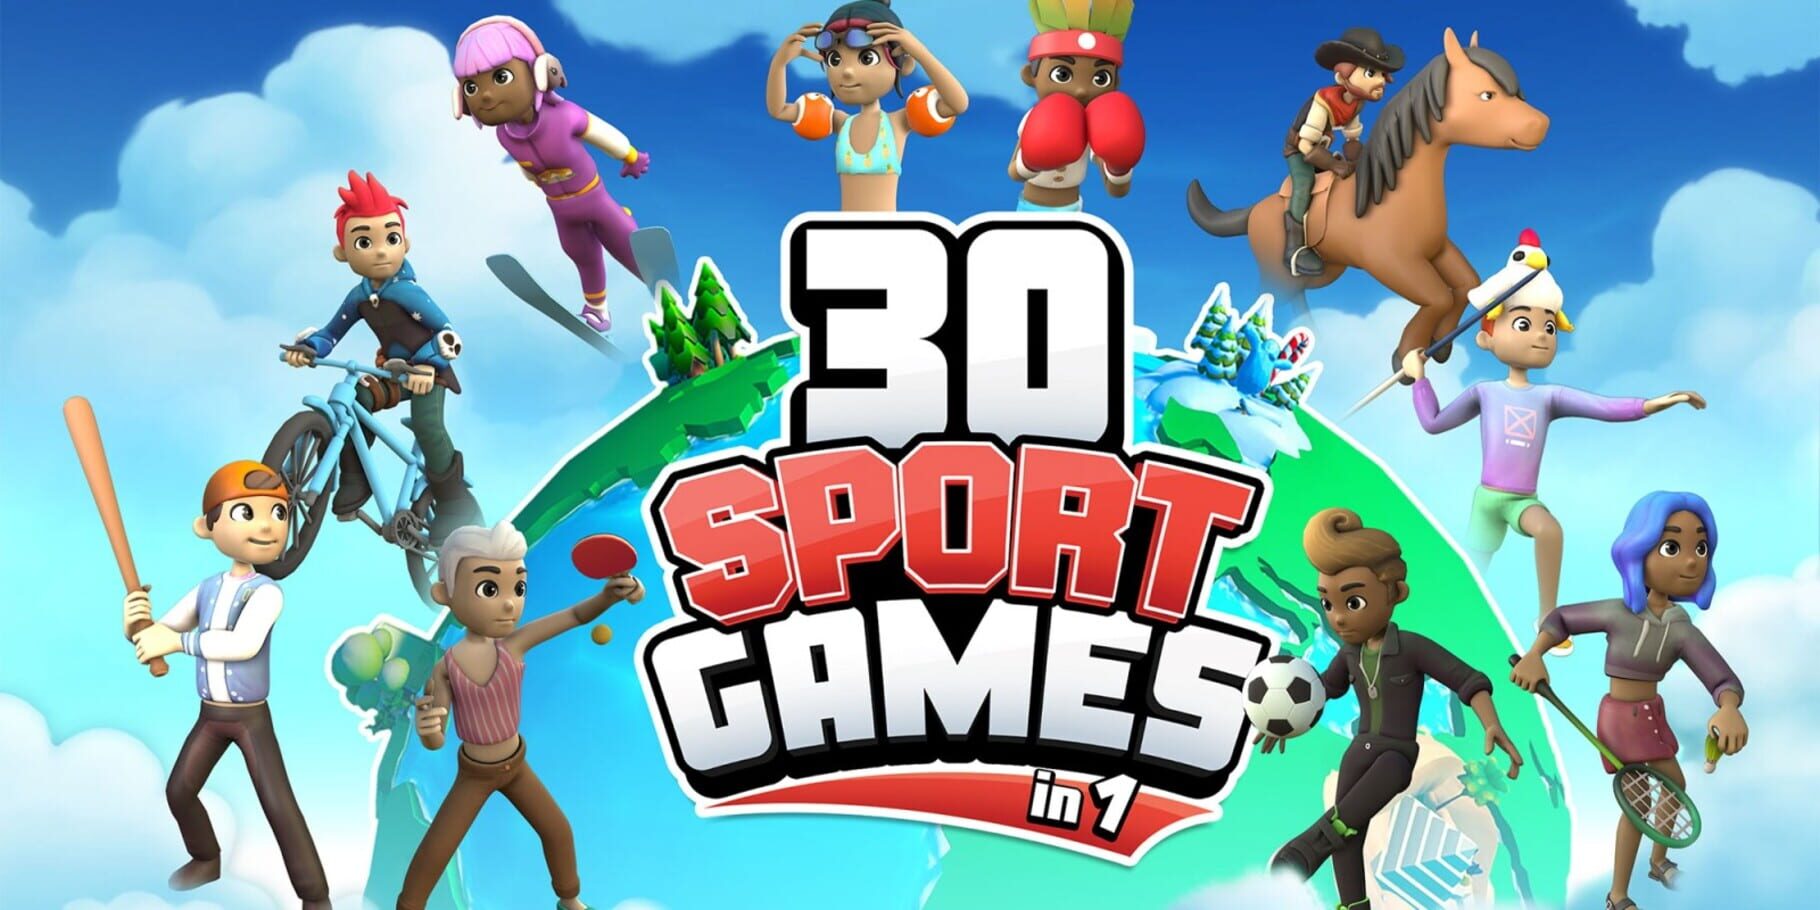 30 Sport Games in 1 artwork